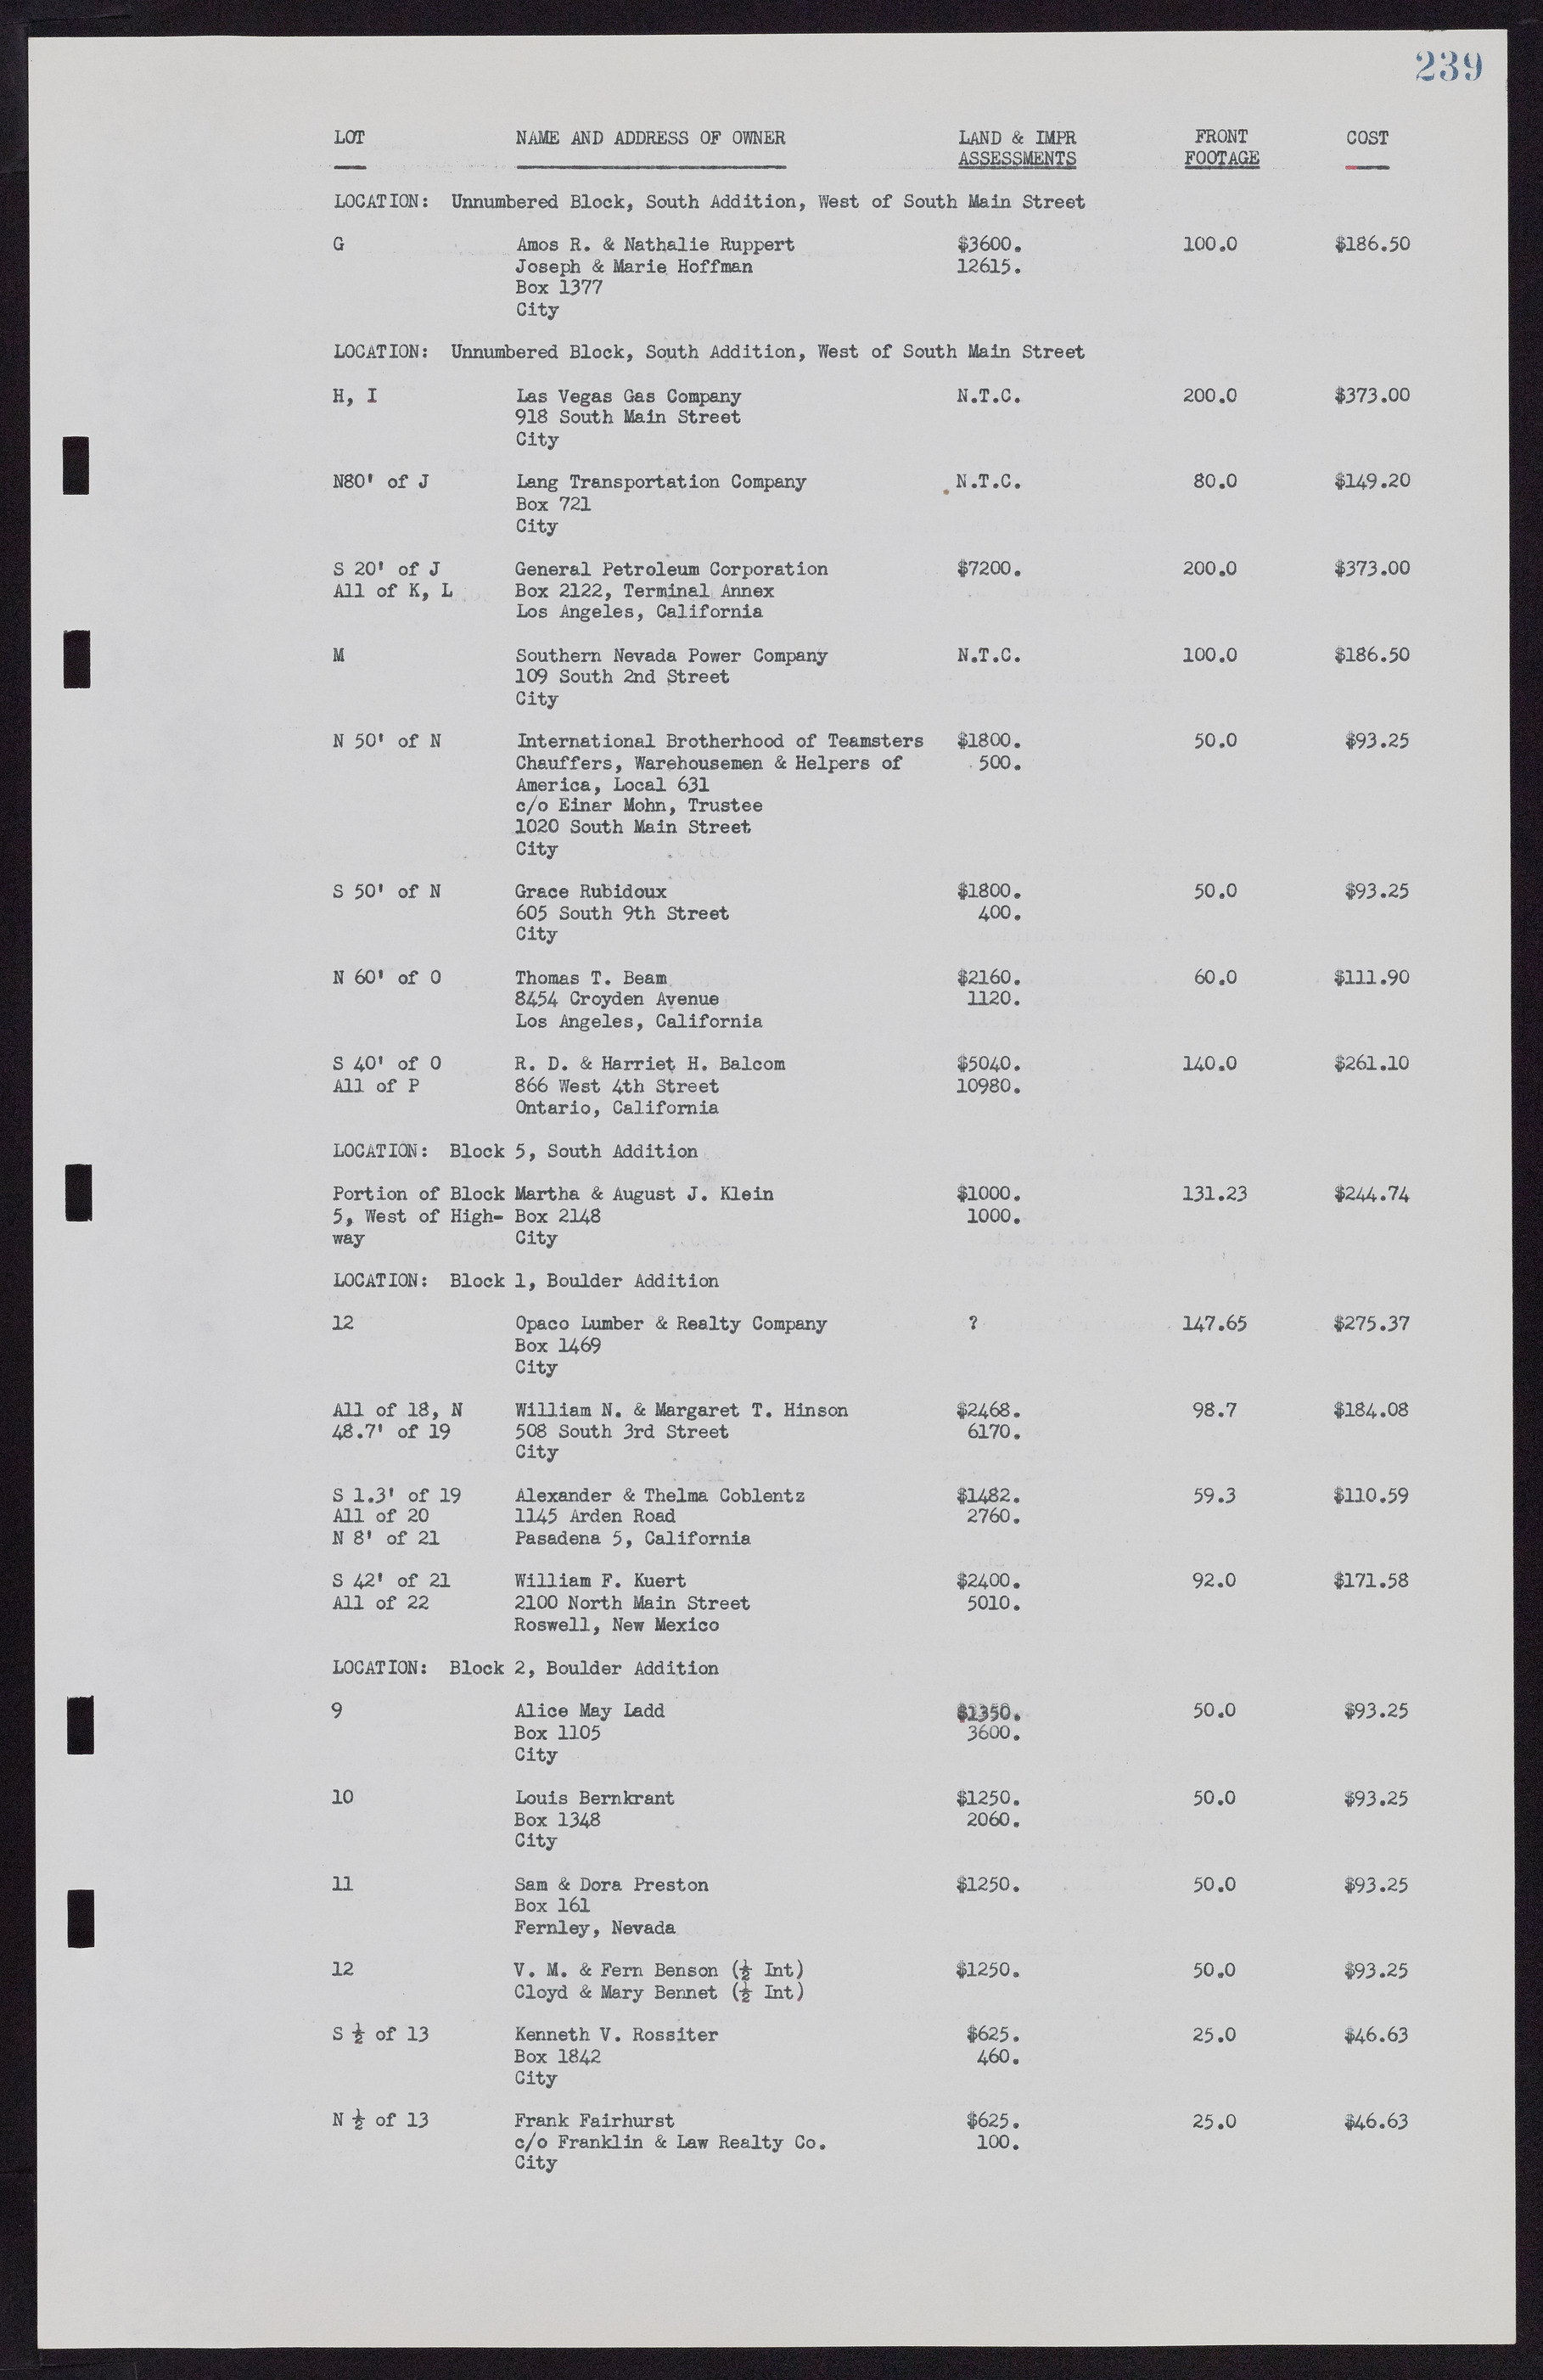 Las Vegas City Commission Minutes, November 7, 1949 to May 21, 1952, lvc000007-249